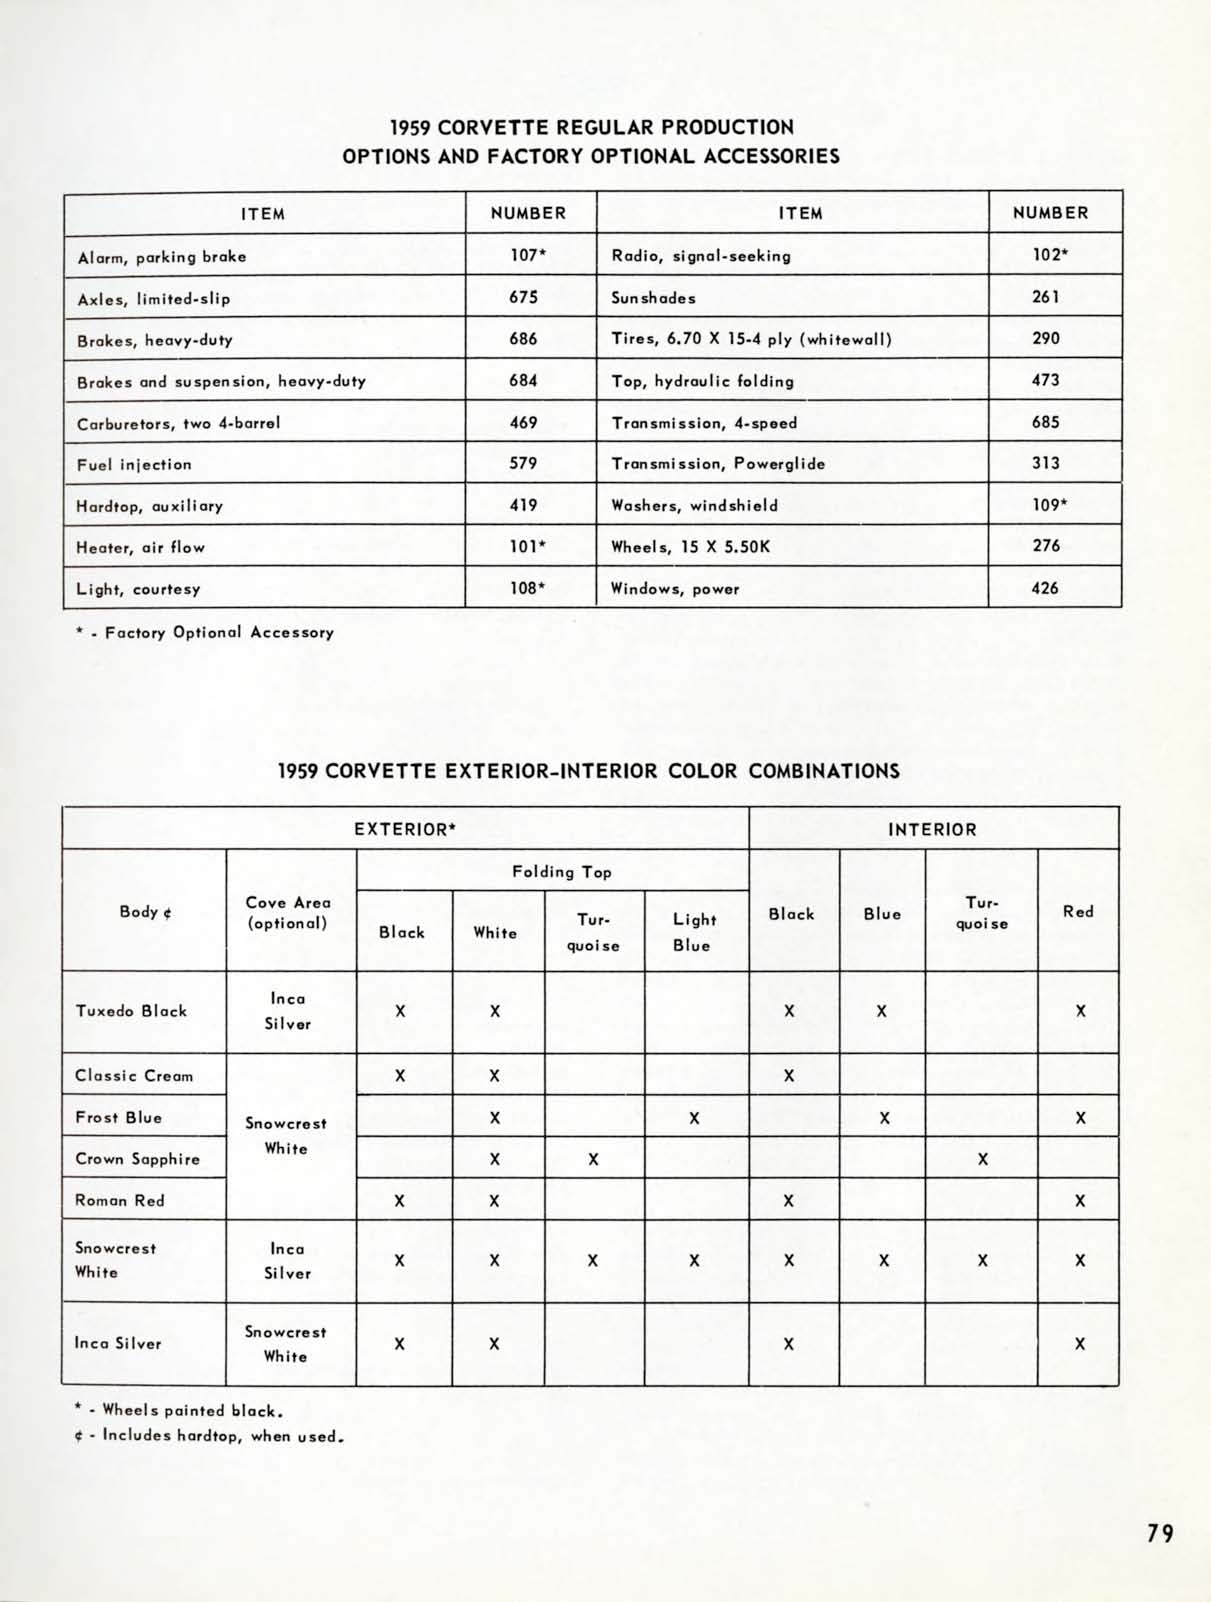 1959_Chevrolet_Engineering_Features-79